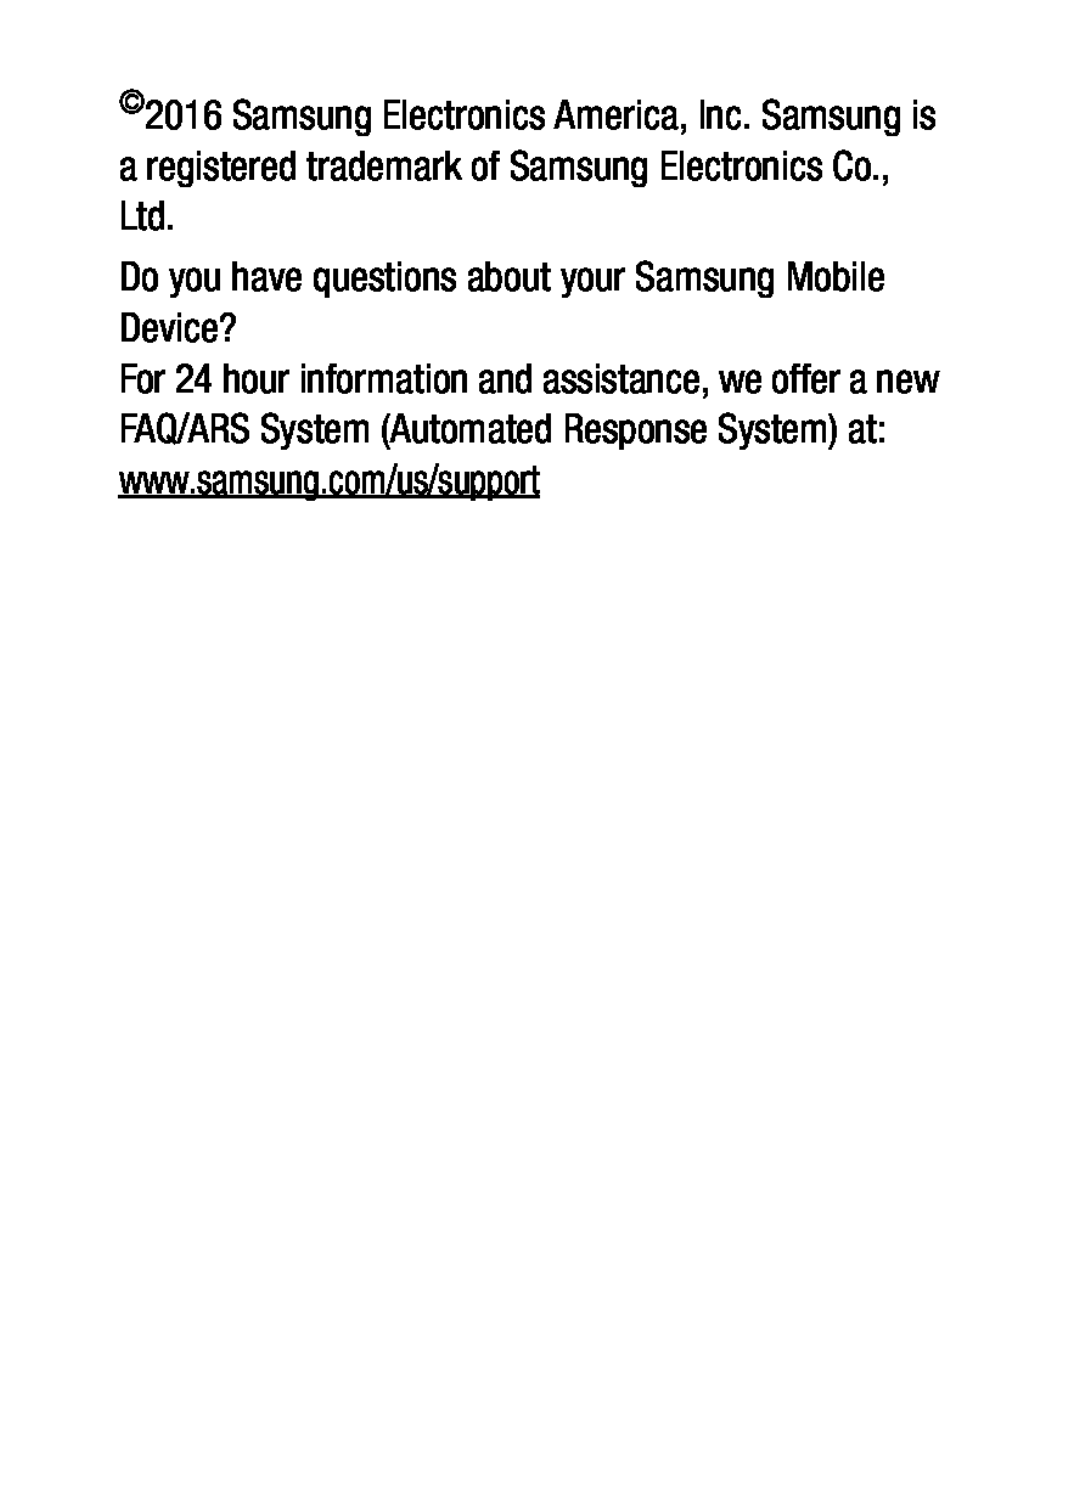 www.samsung.com/us/support Galaxy Tab S2 9.7 Verizon